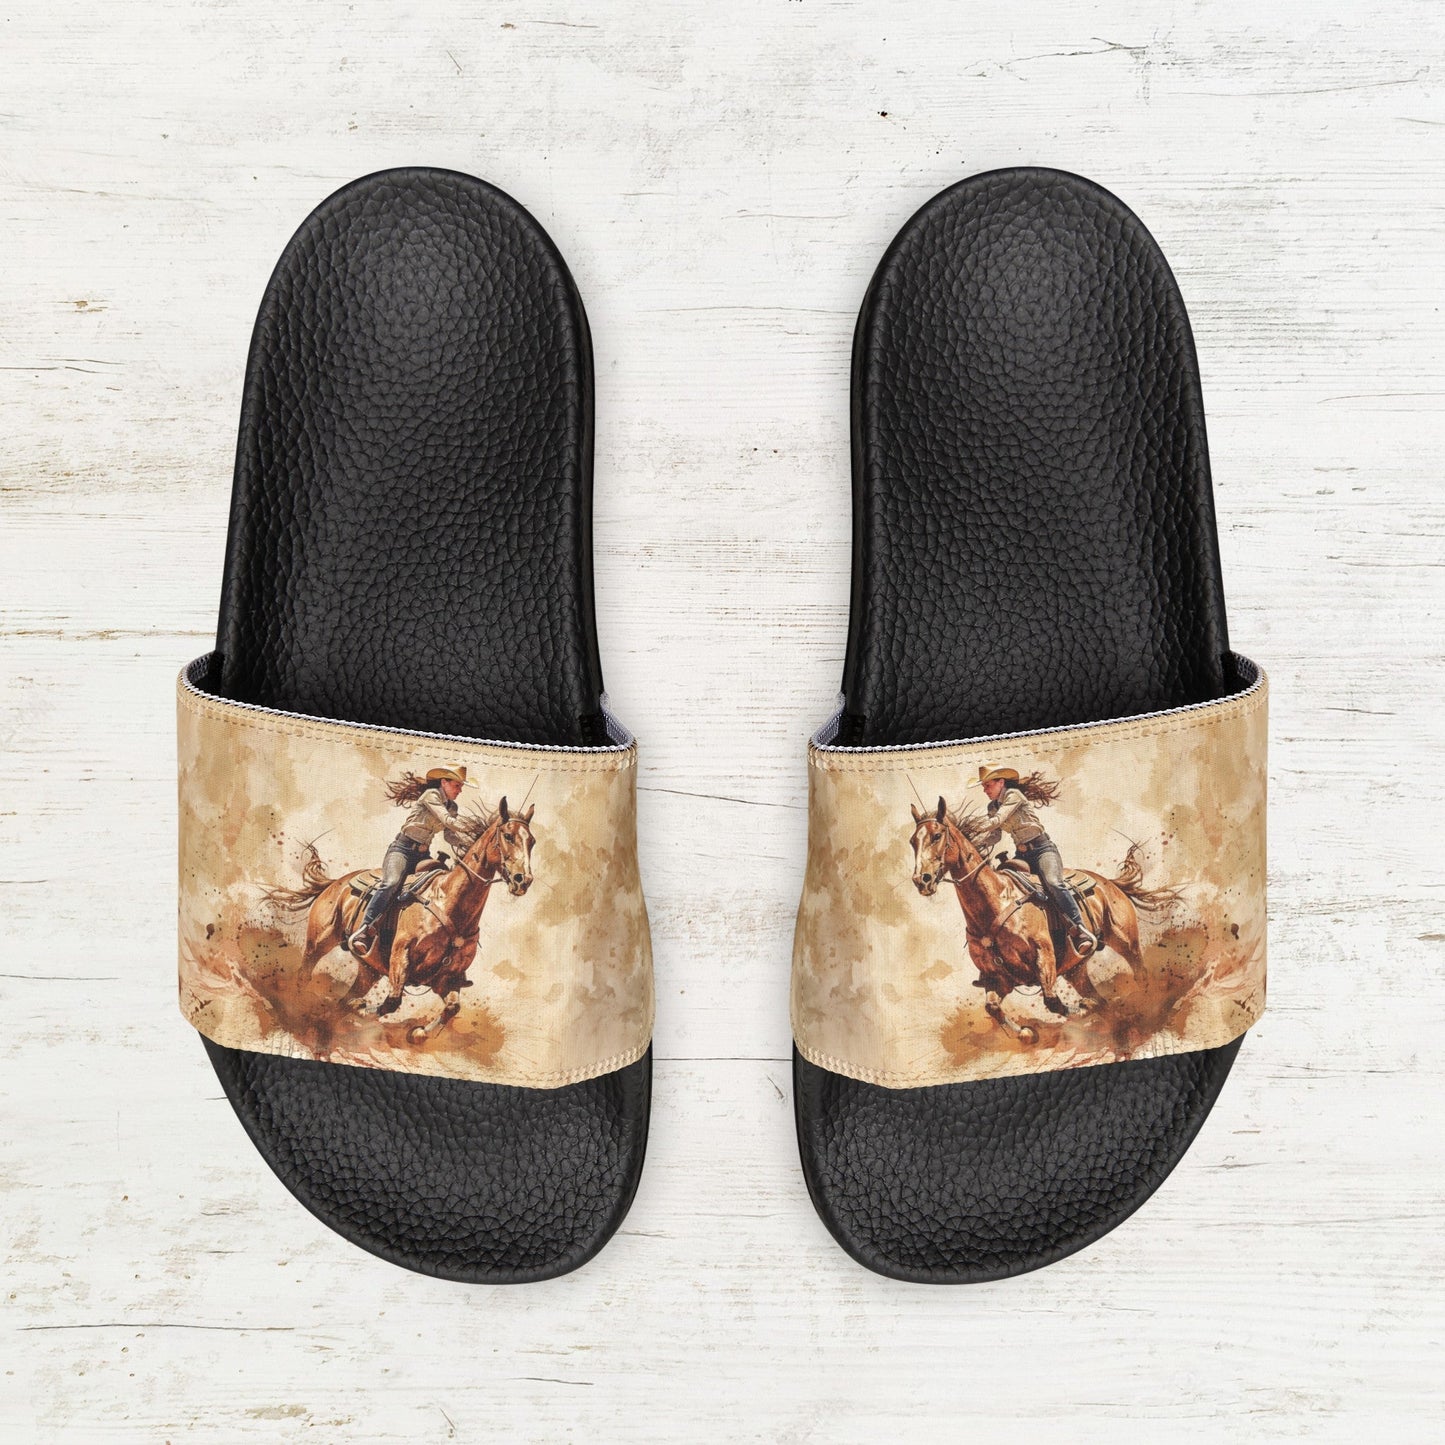 Barrel Horse Racing Sandals, Easy, Comfortable Slide On Art Shoes - FlooredByArt